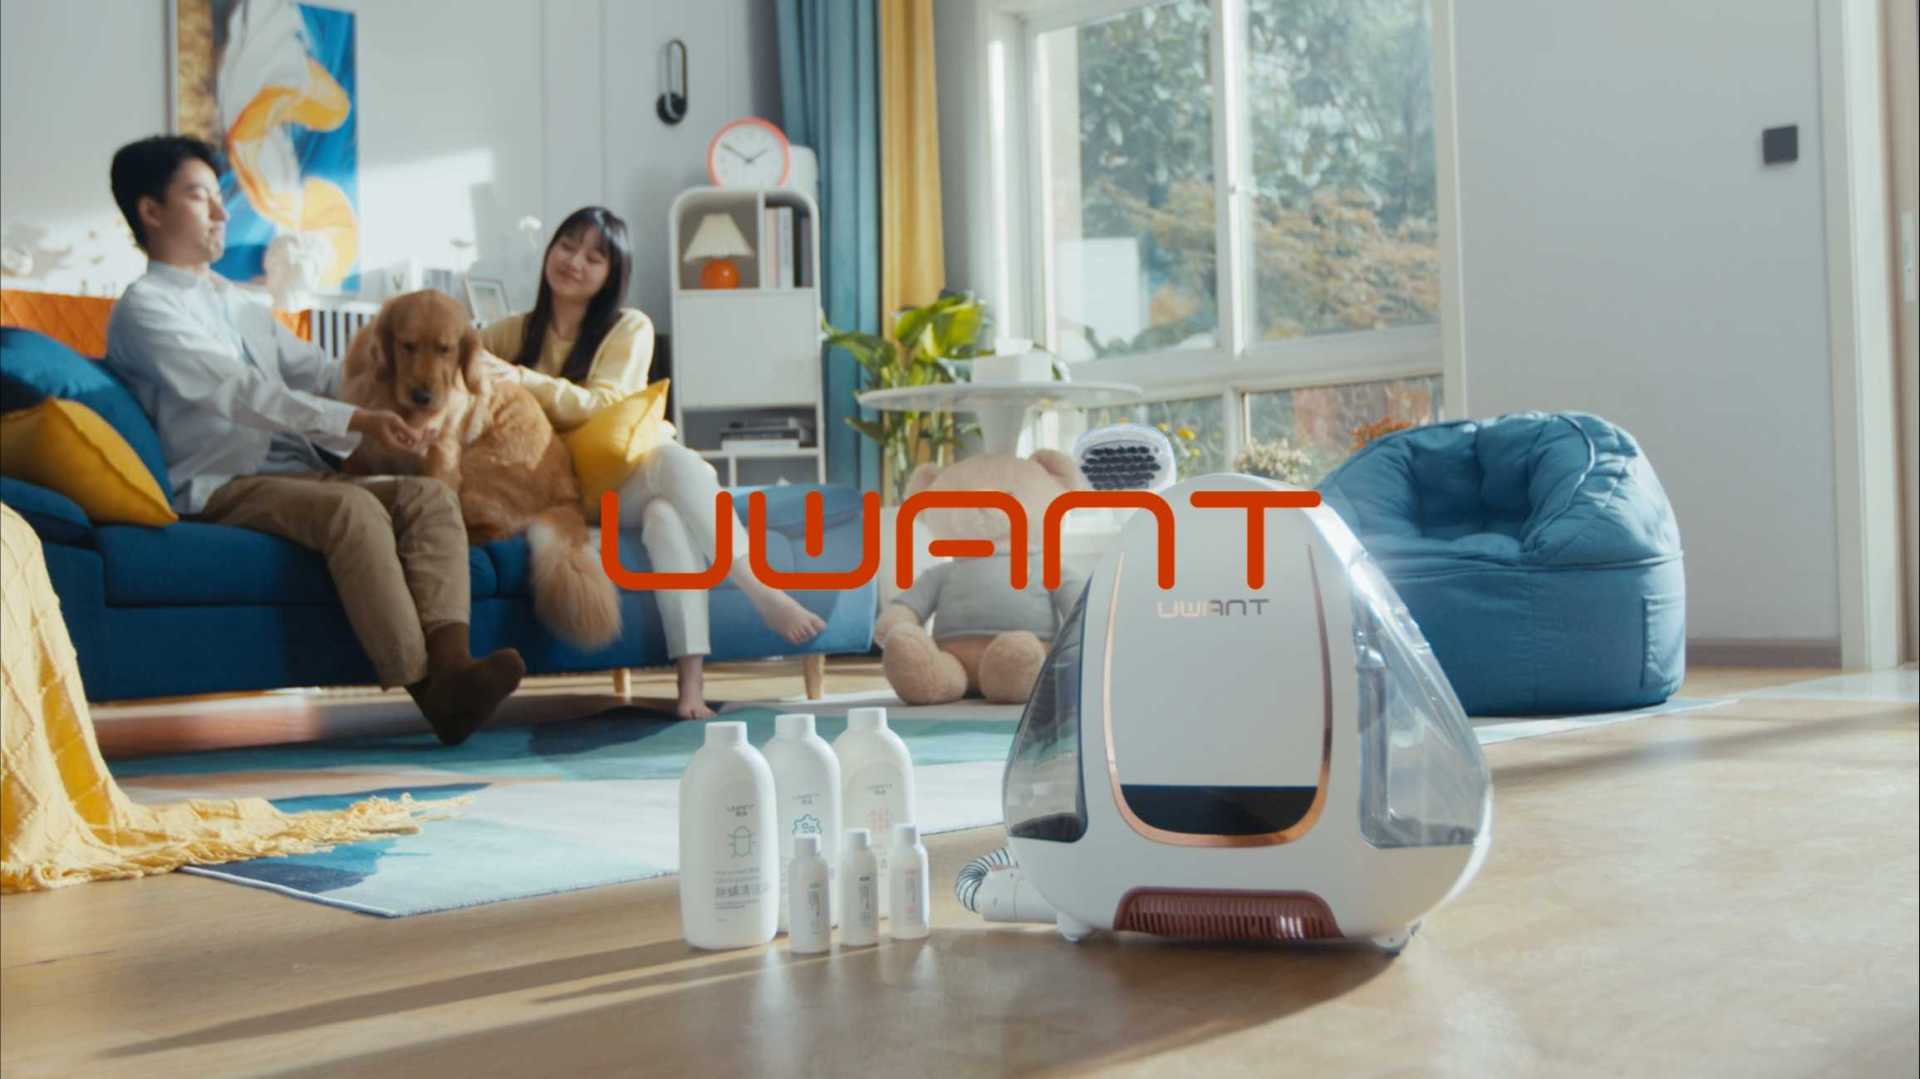 Uwant&华为商城 产品广告